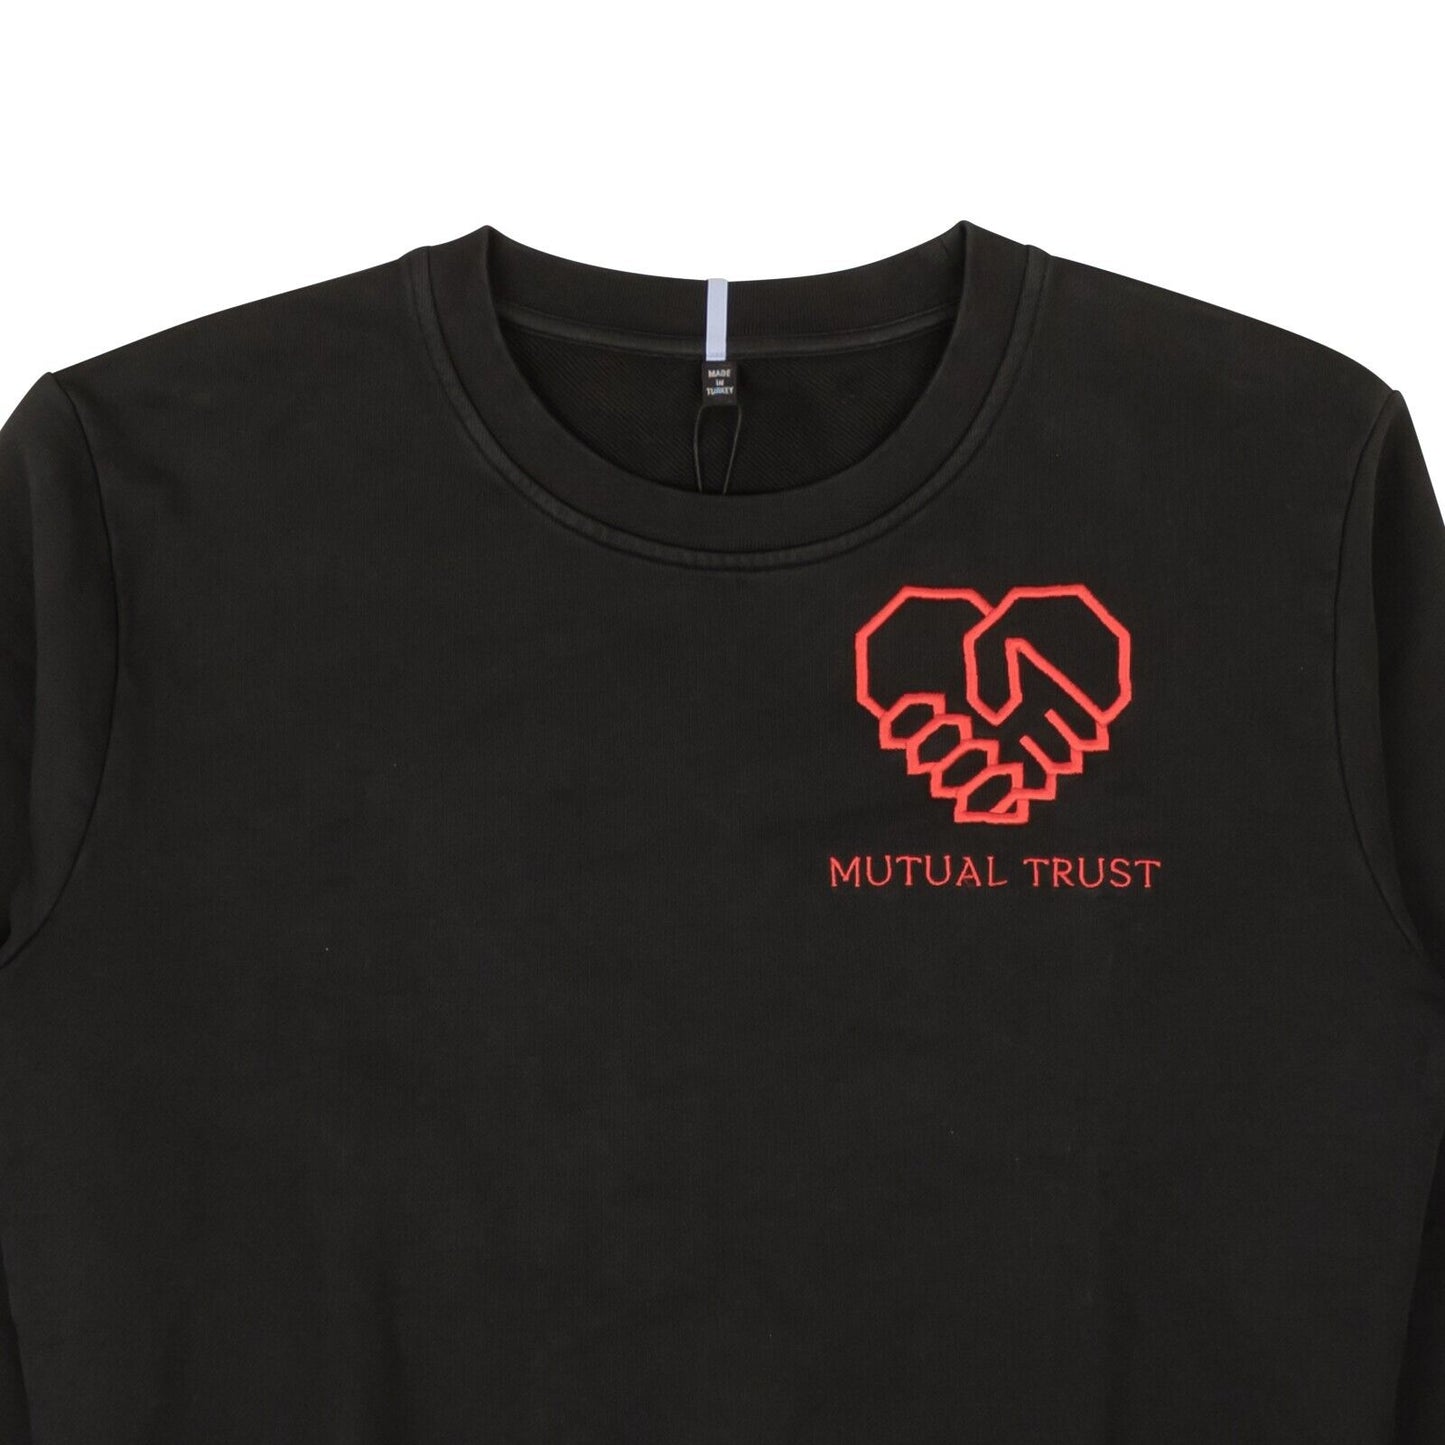 Mcq Mutual Trust Crewneck Sweatshirt - Black